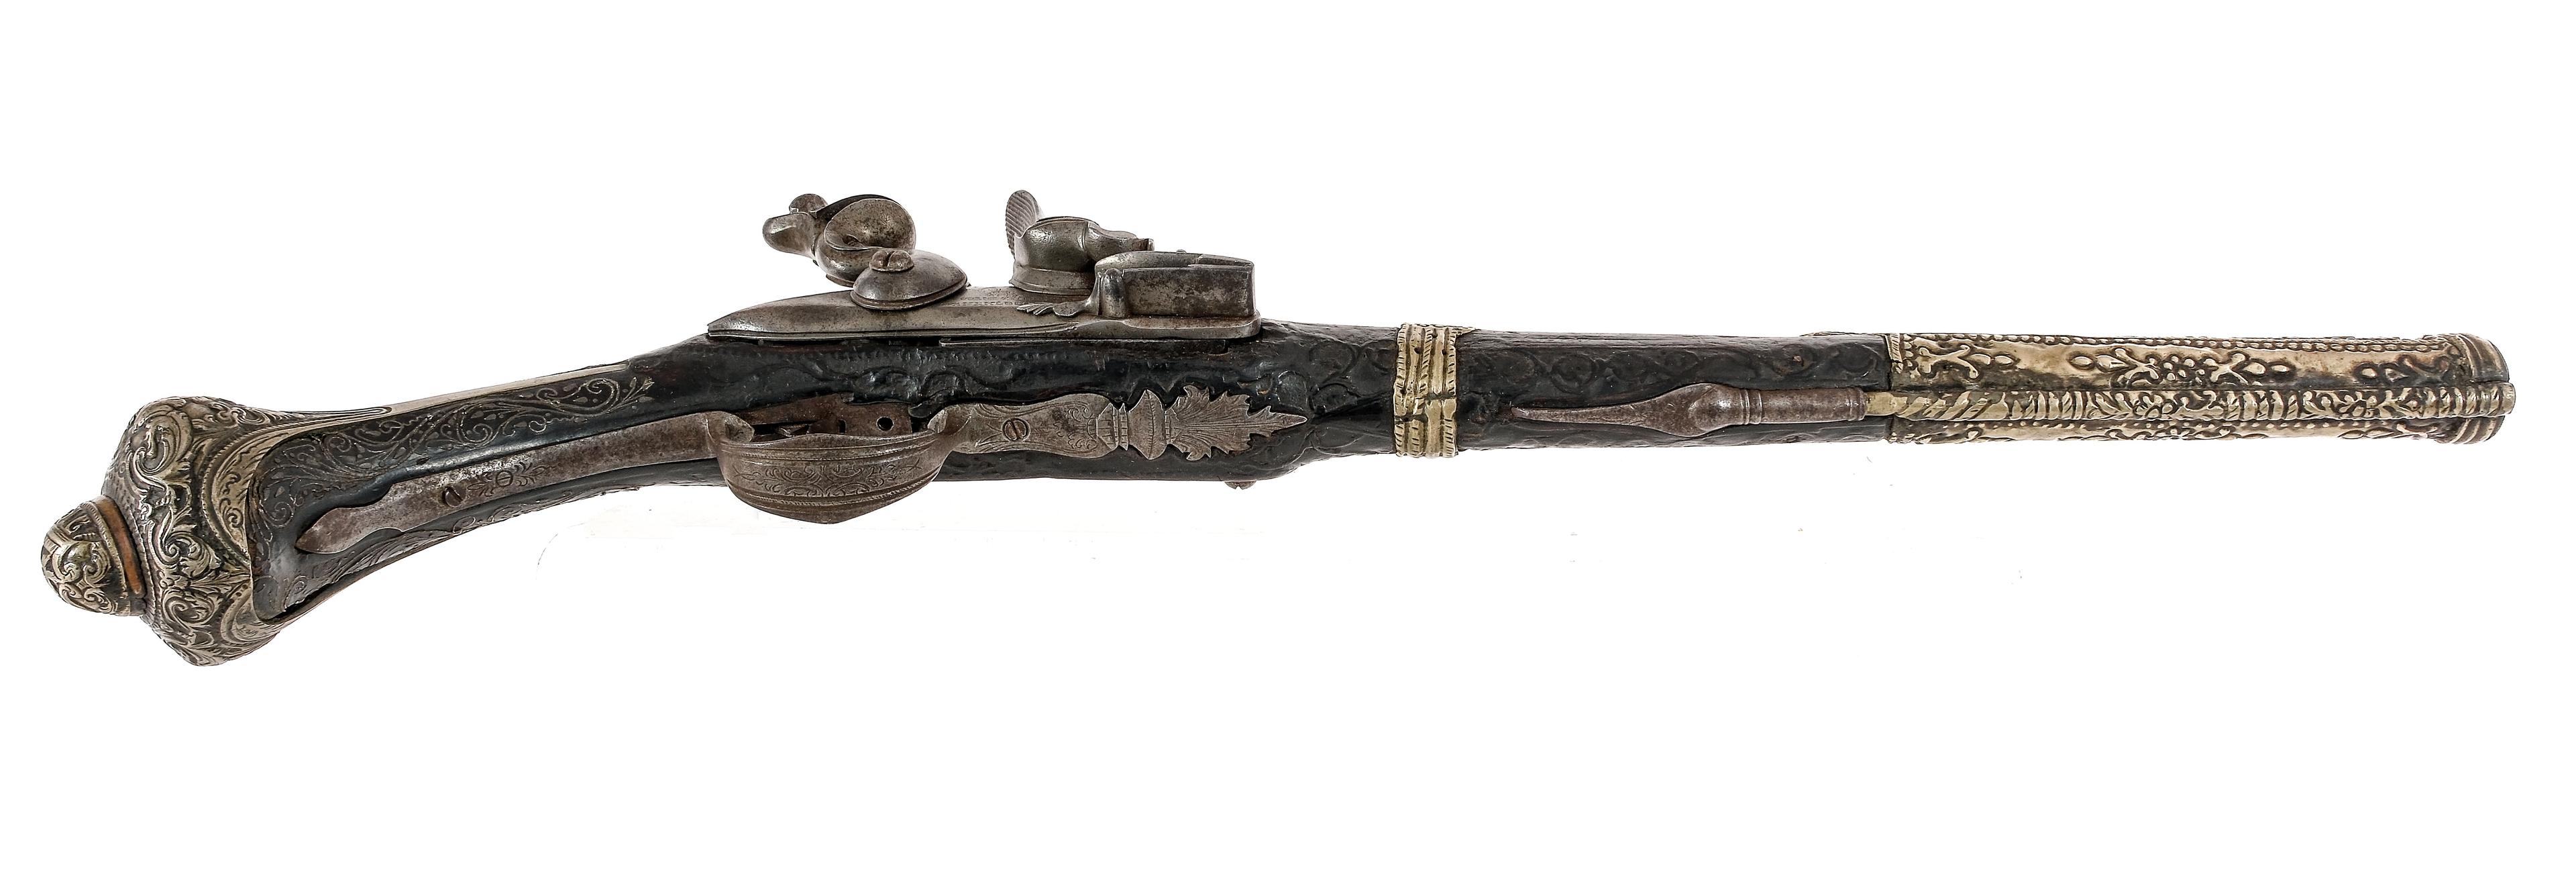 Greek or Ottoman Tin Alloy Gilt Flintlock Pistol